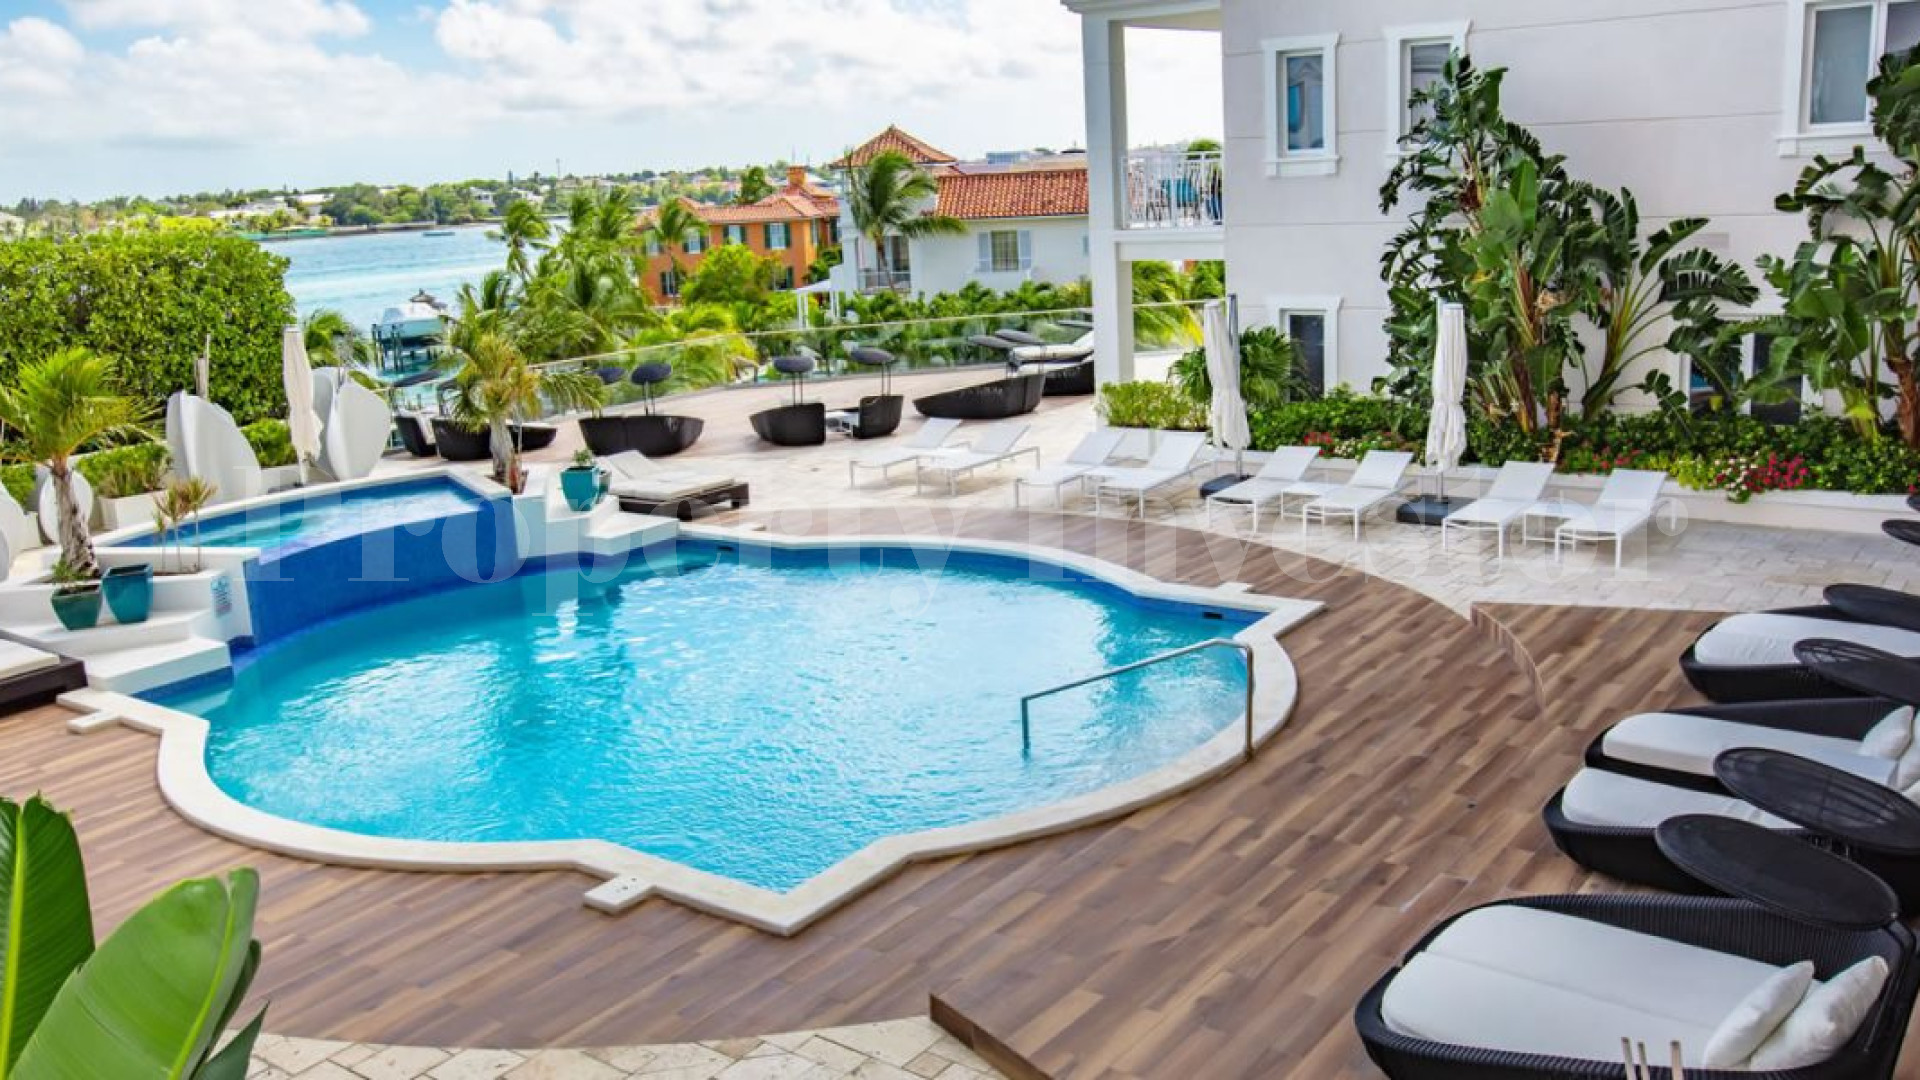 4 Bedroon Luxury Penthouse Condo on Paradise Island